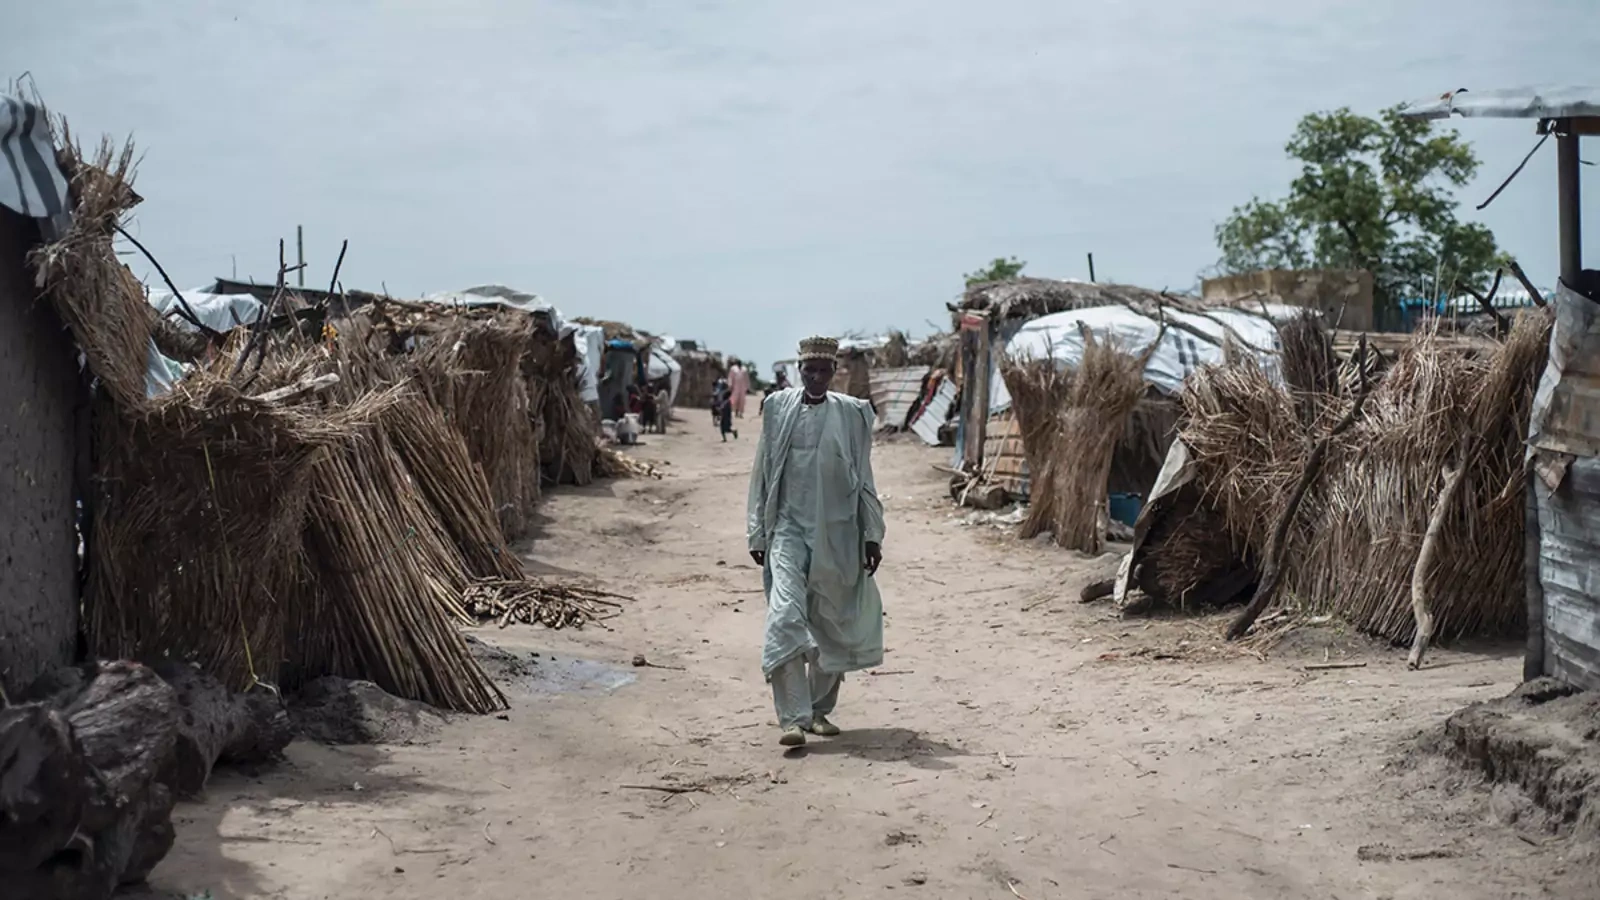 A man walks through a camp for internally displaced people in Rann, Nigeria.